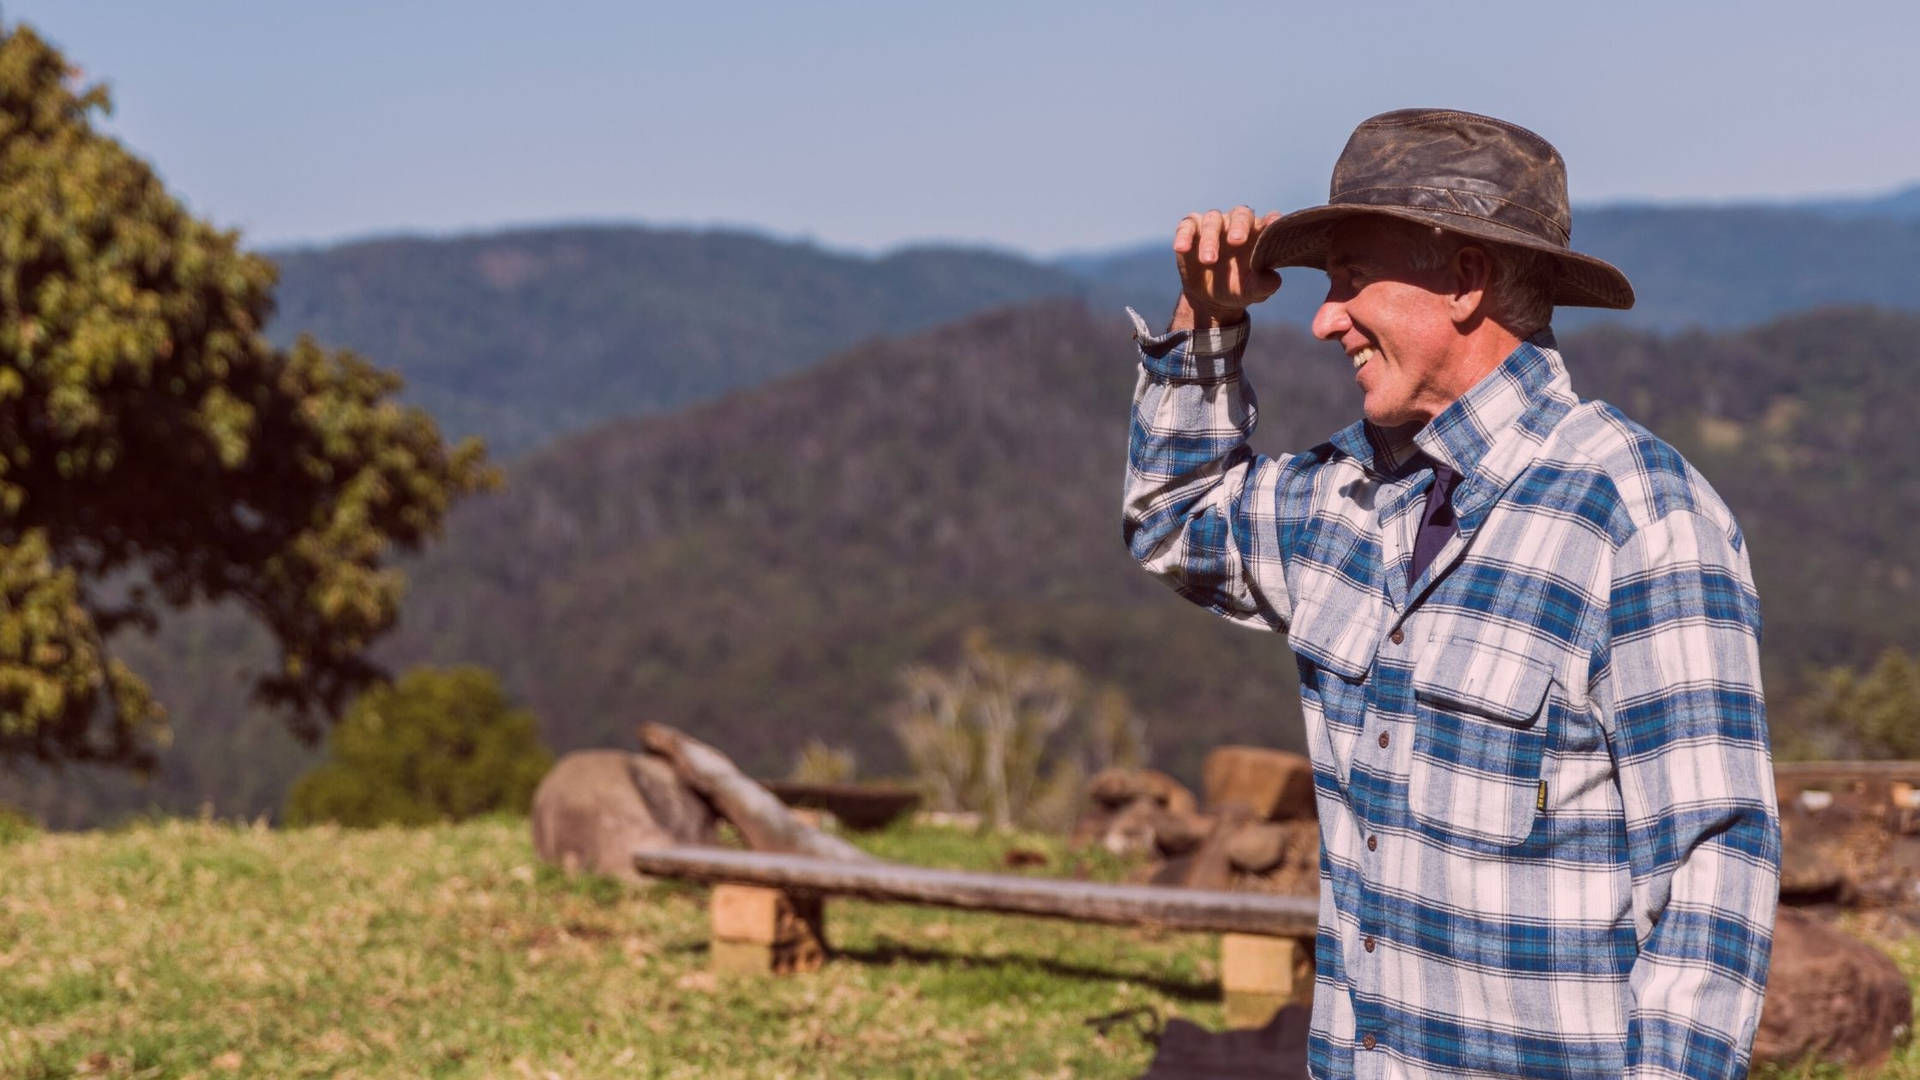 Caption: Cheerful Farmer Enjoying His Work Background